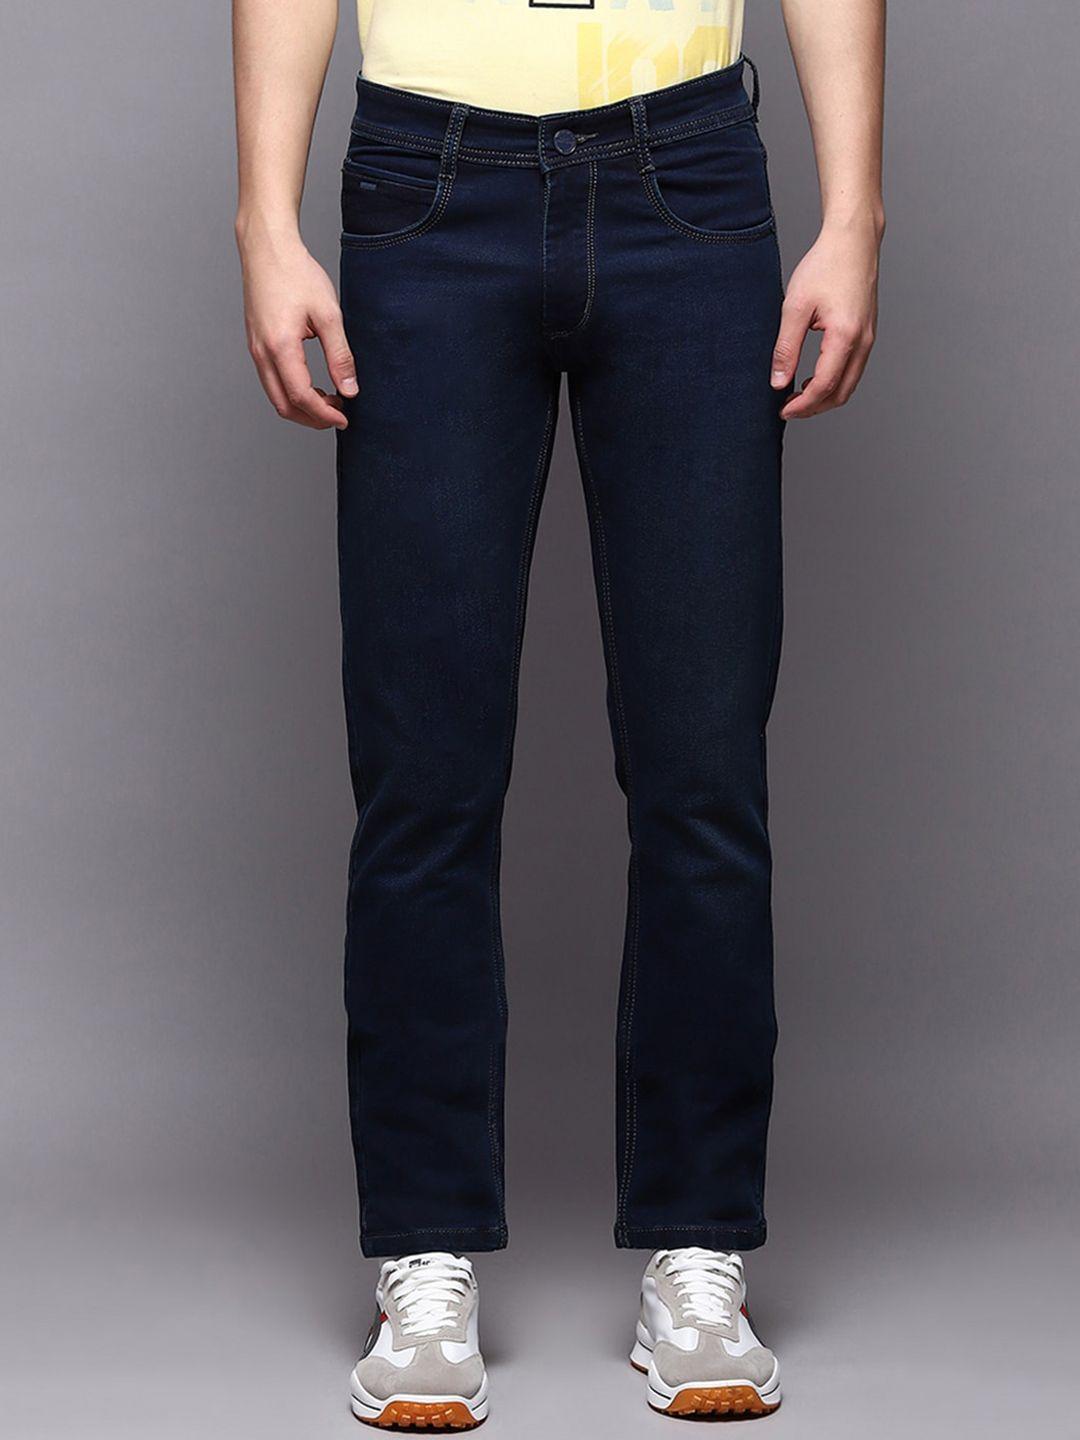 monte carlo slim fit high-rise clean look cotton dark jeans